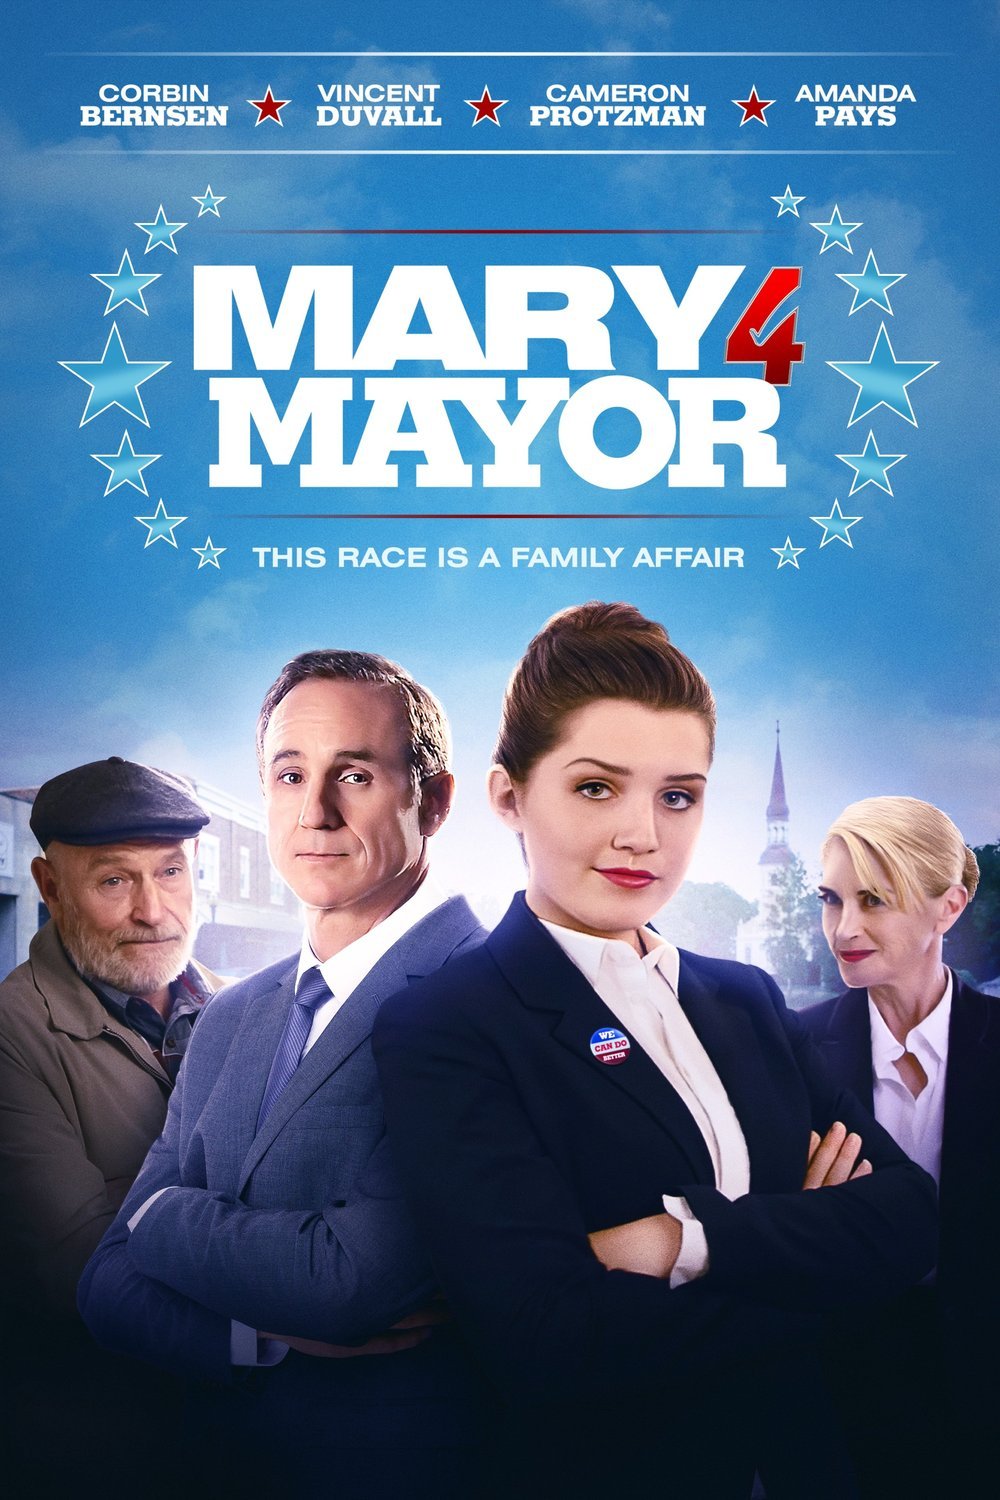 L'affiche du film Mary 4 Mayor